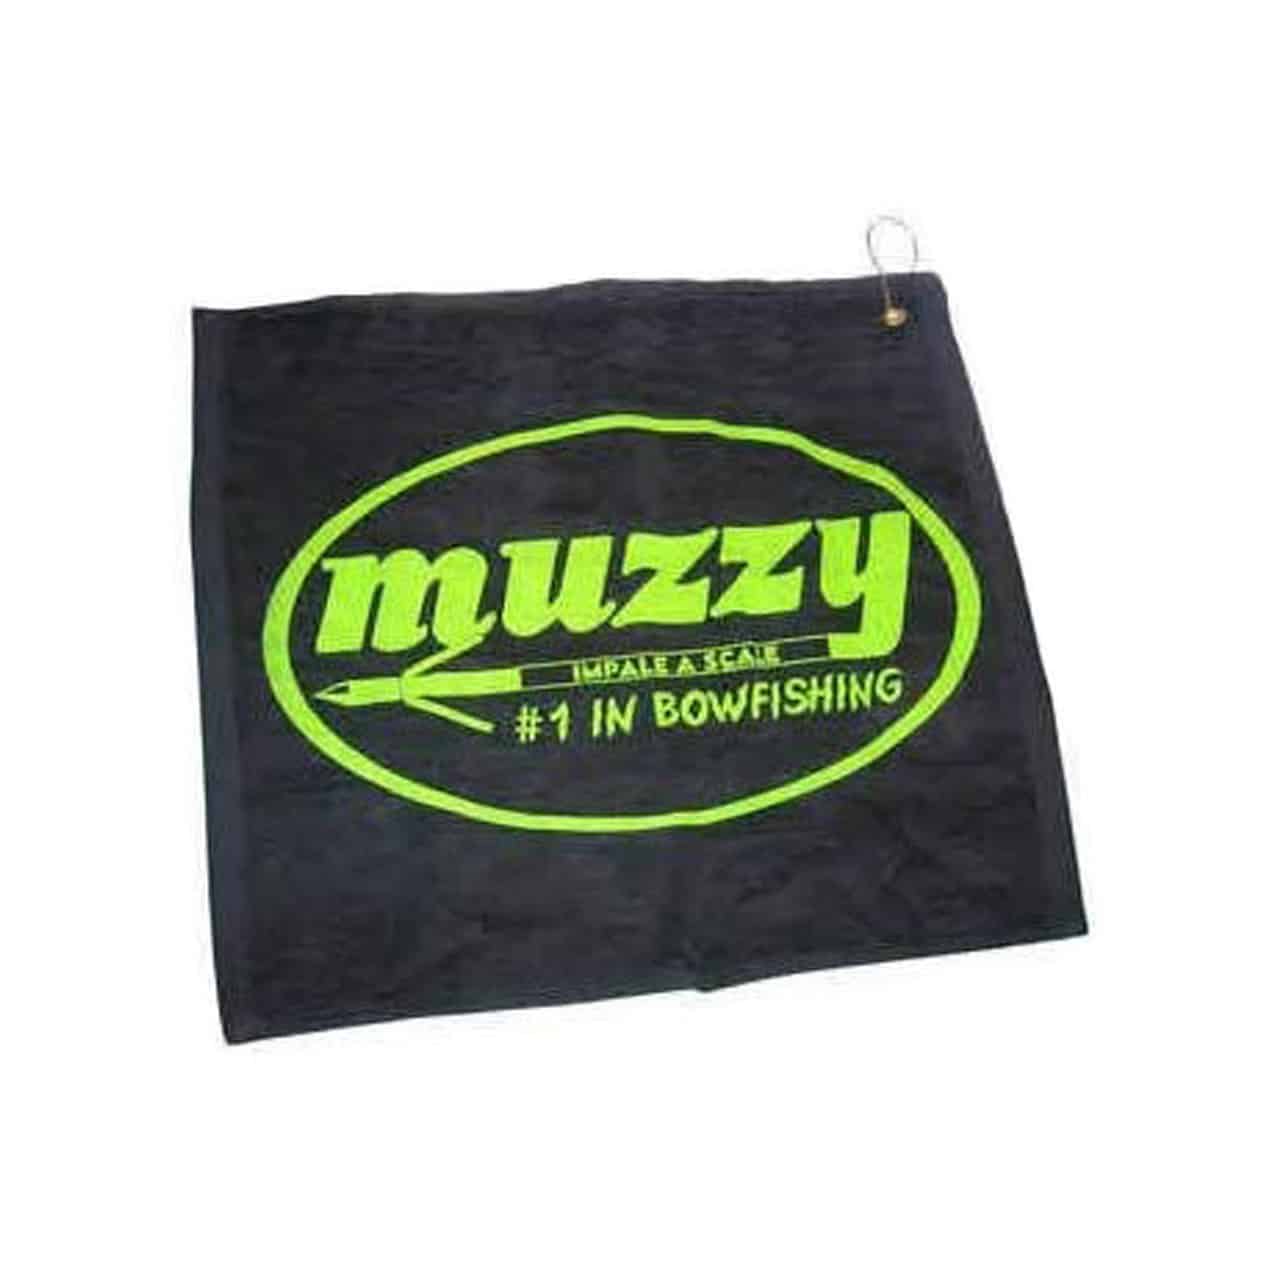 Muzzy Bowfishing Towel